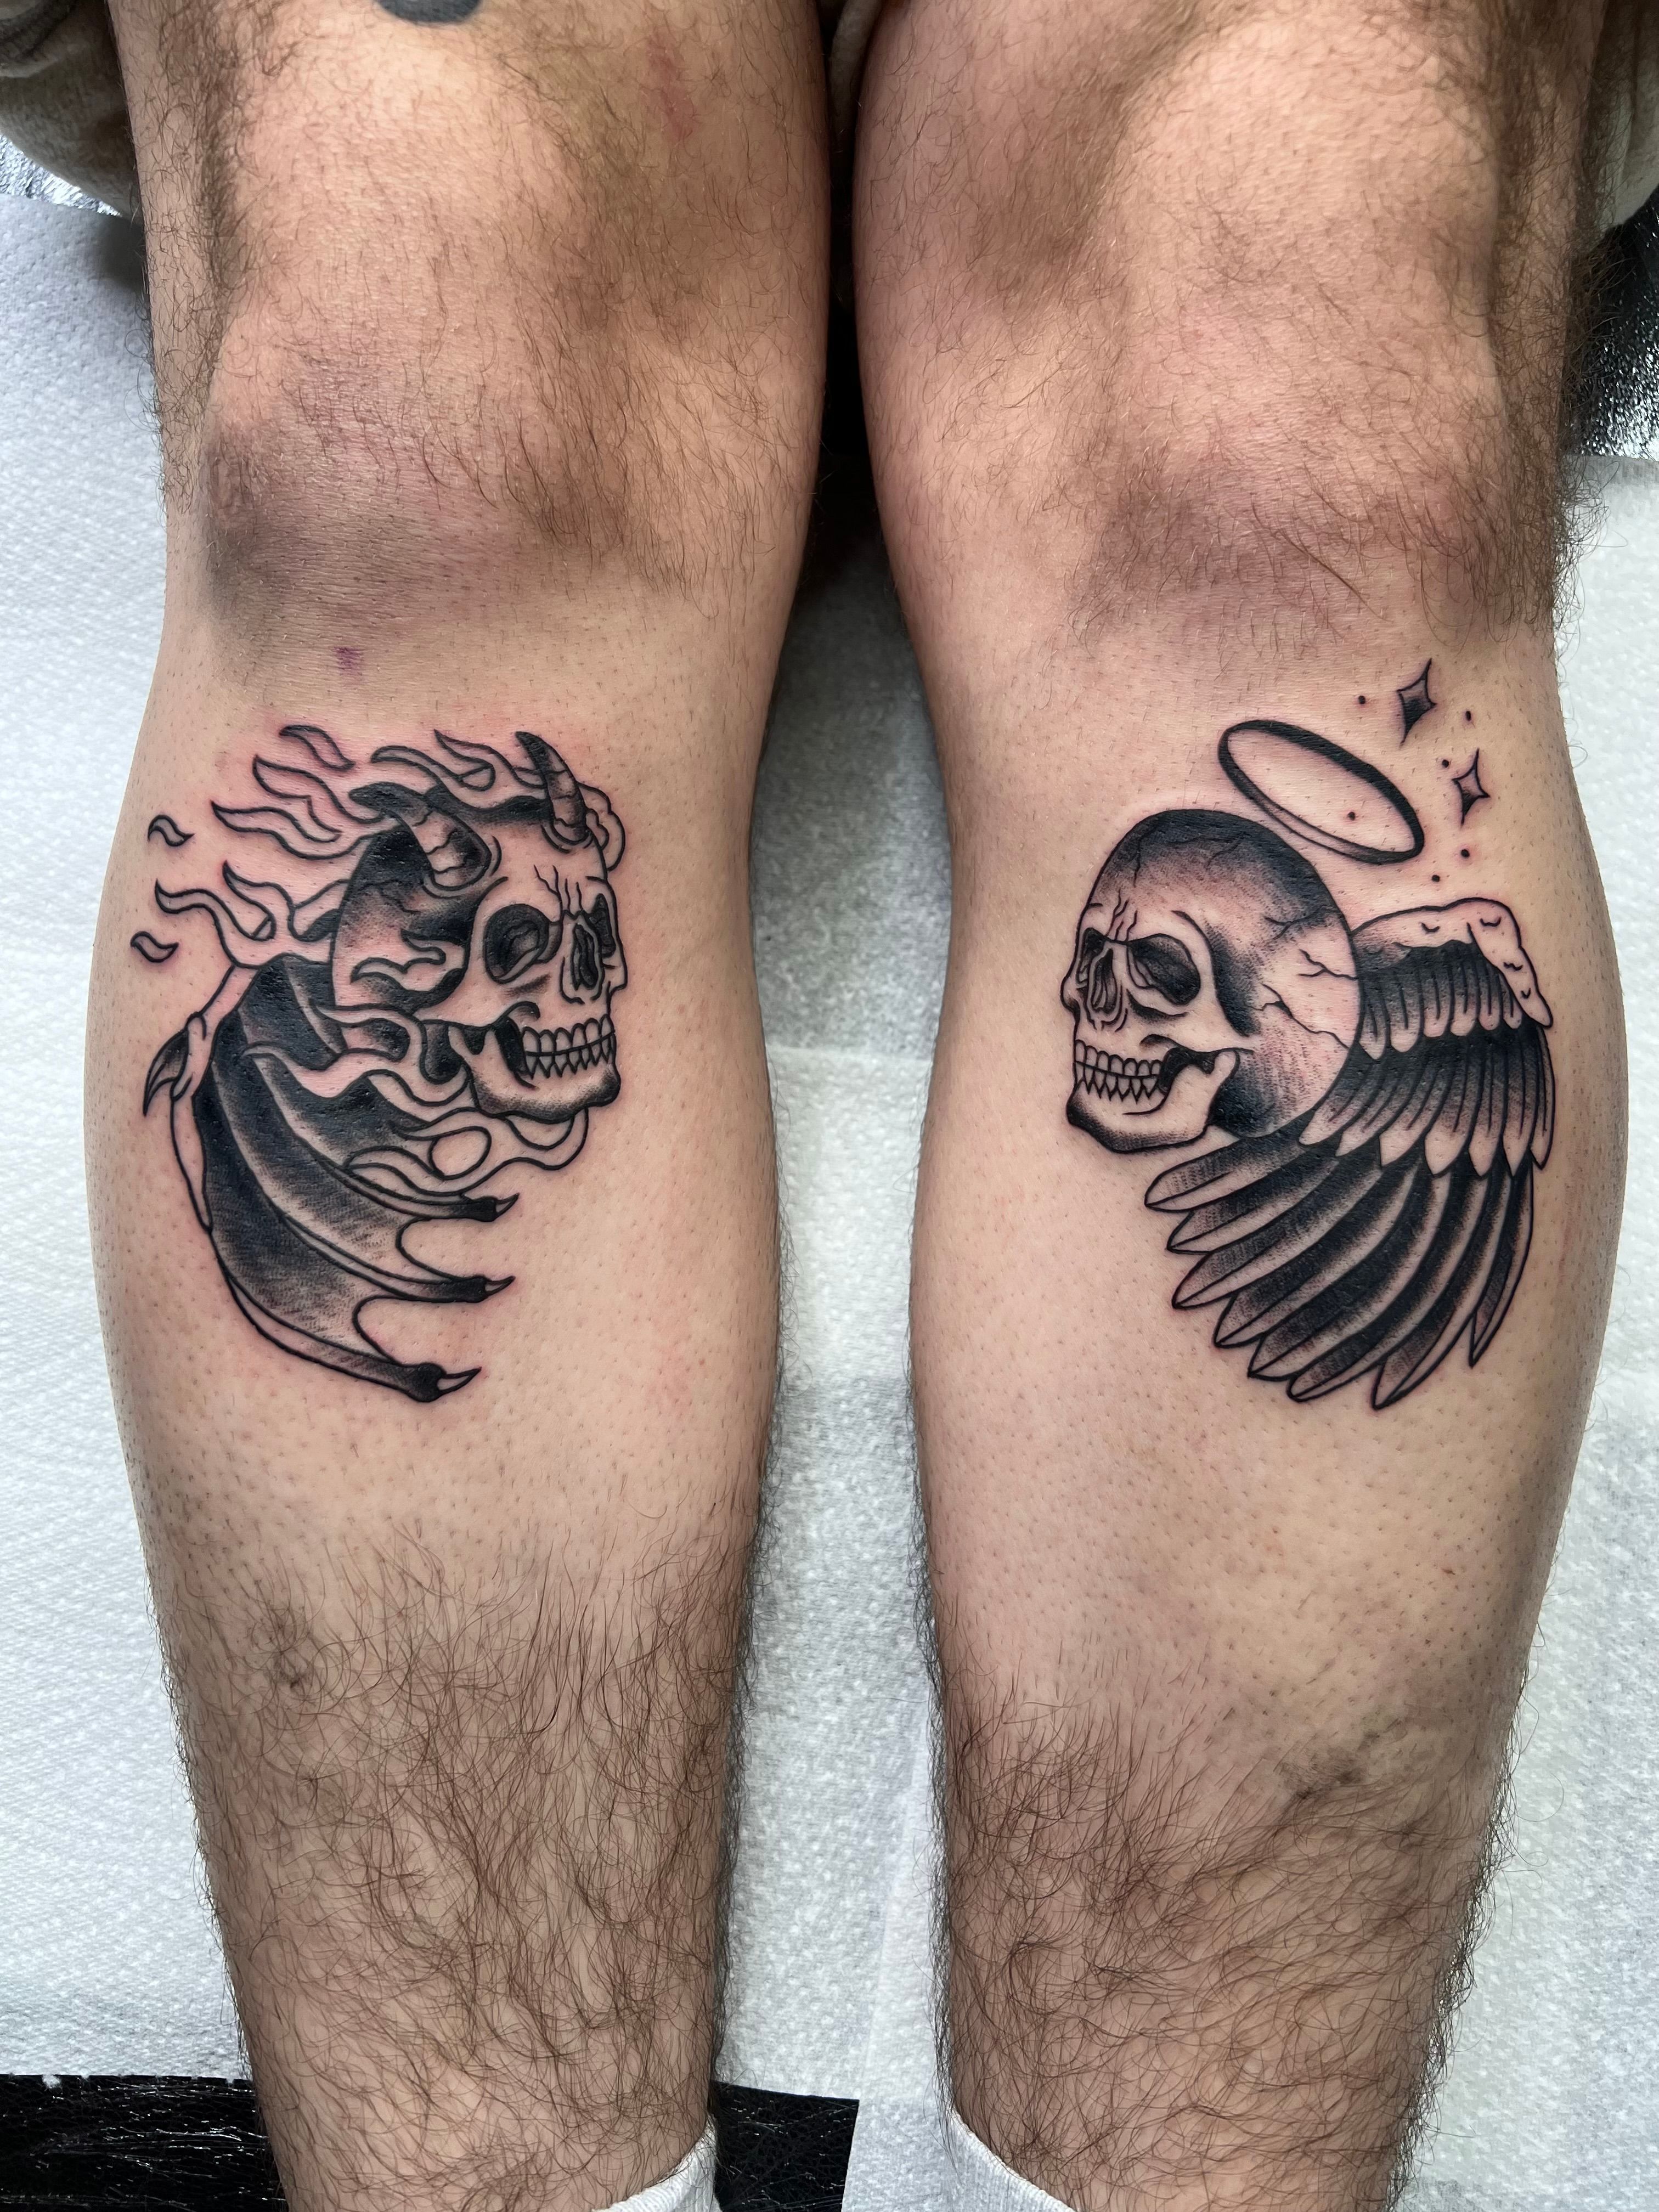 Lucifer | Tattoo designs, Tattoos, Body art tattoos